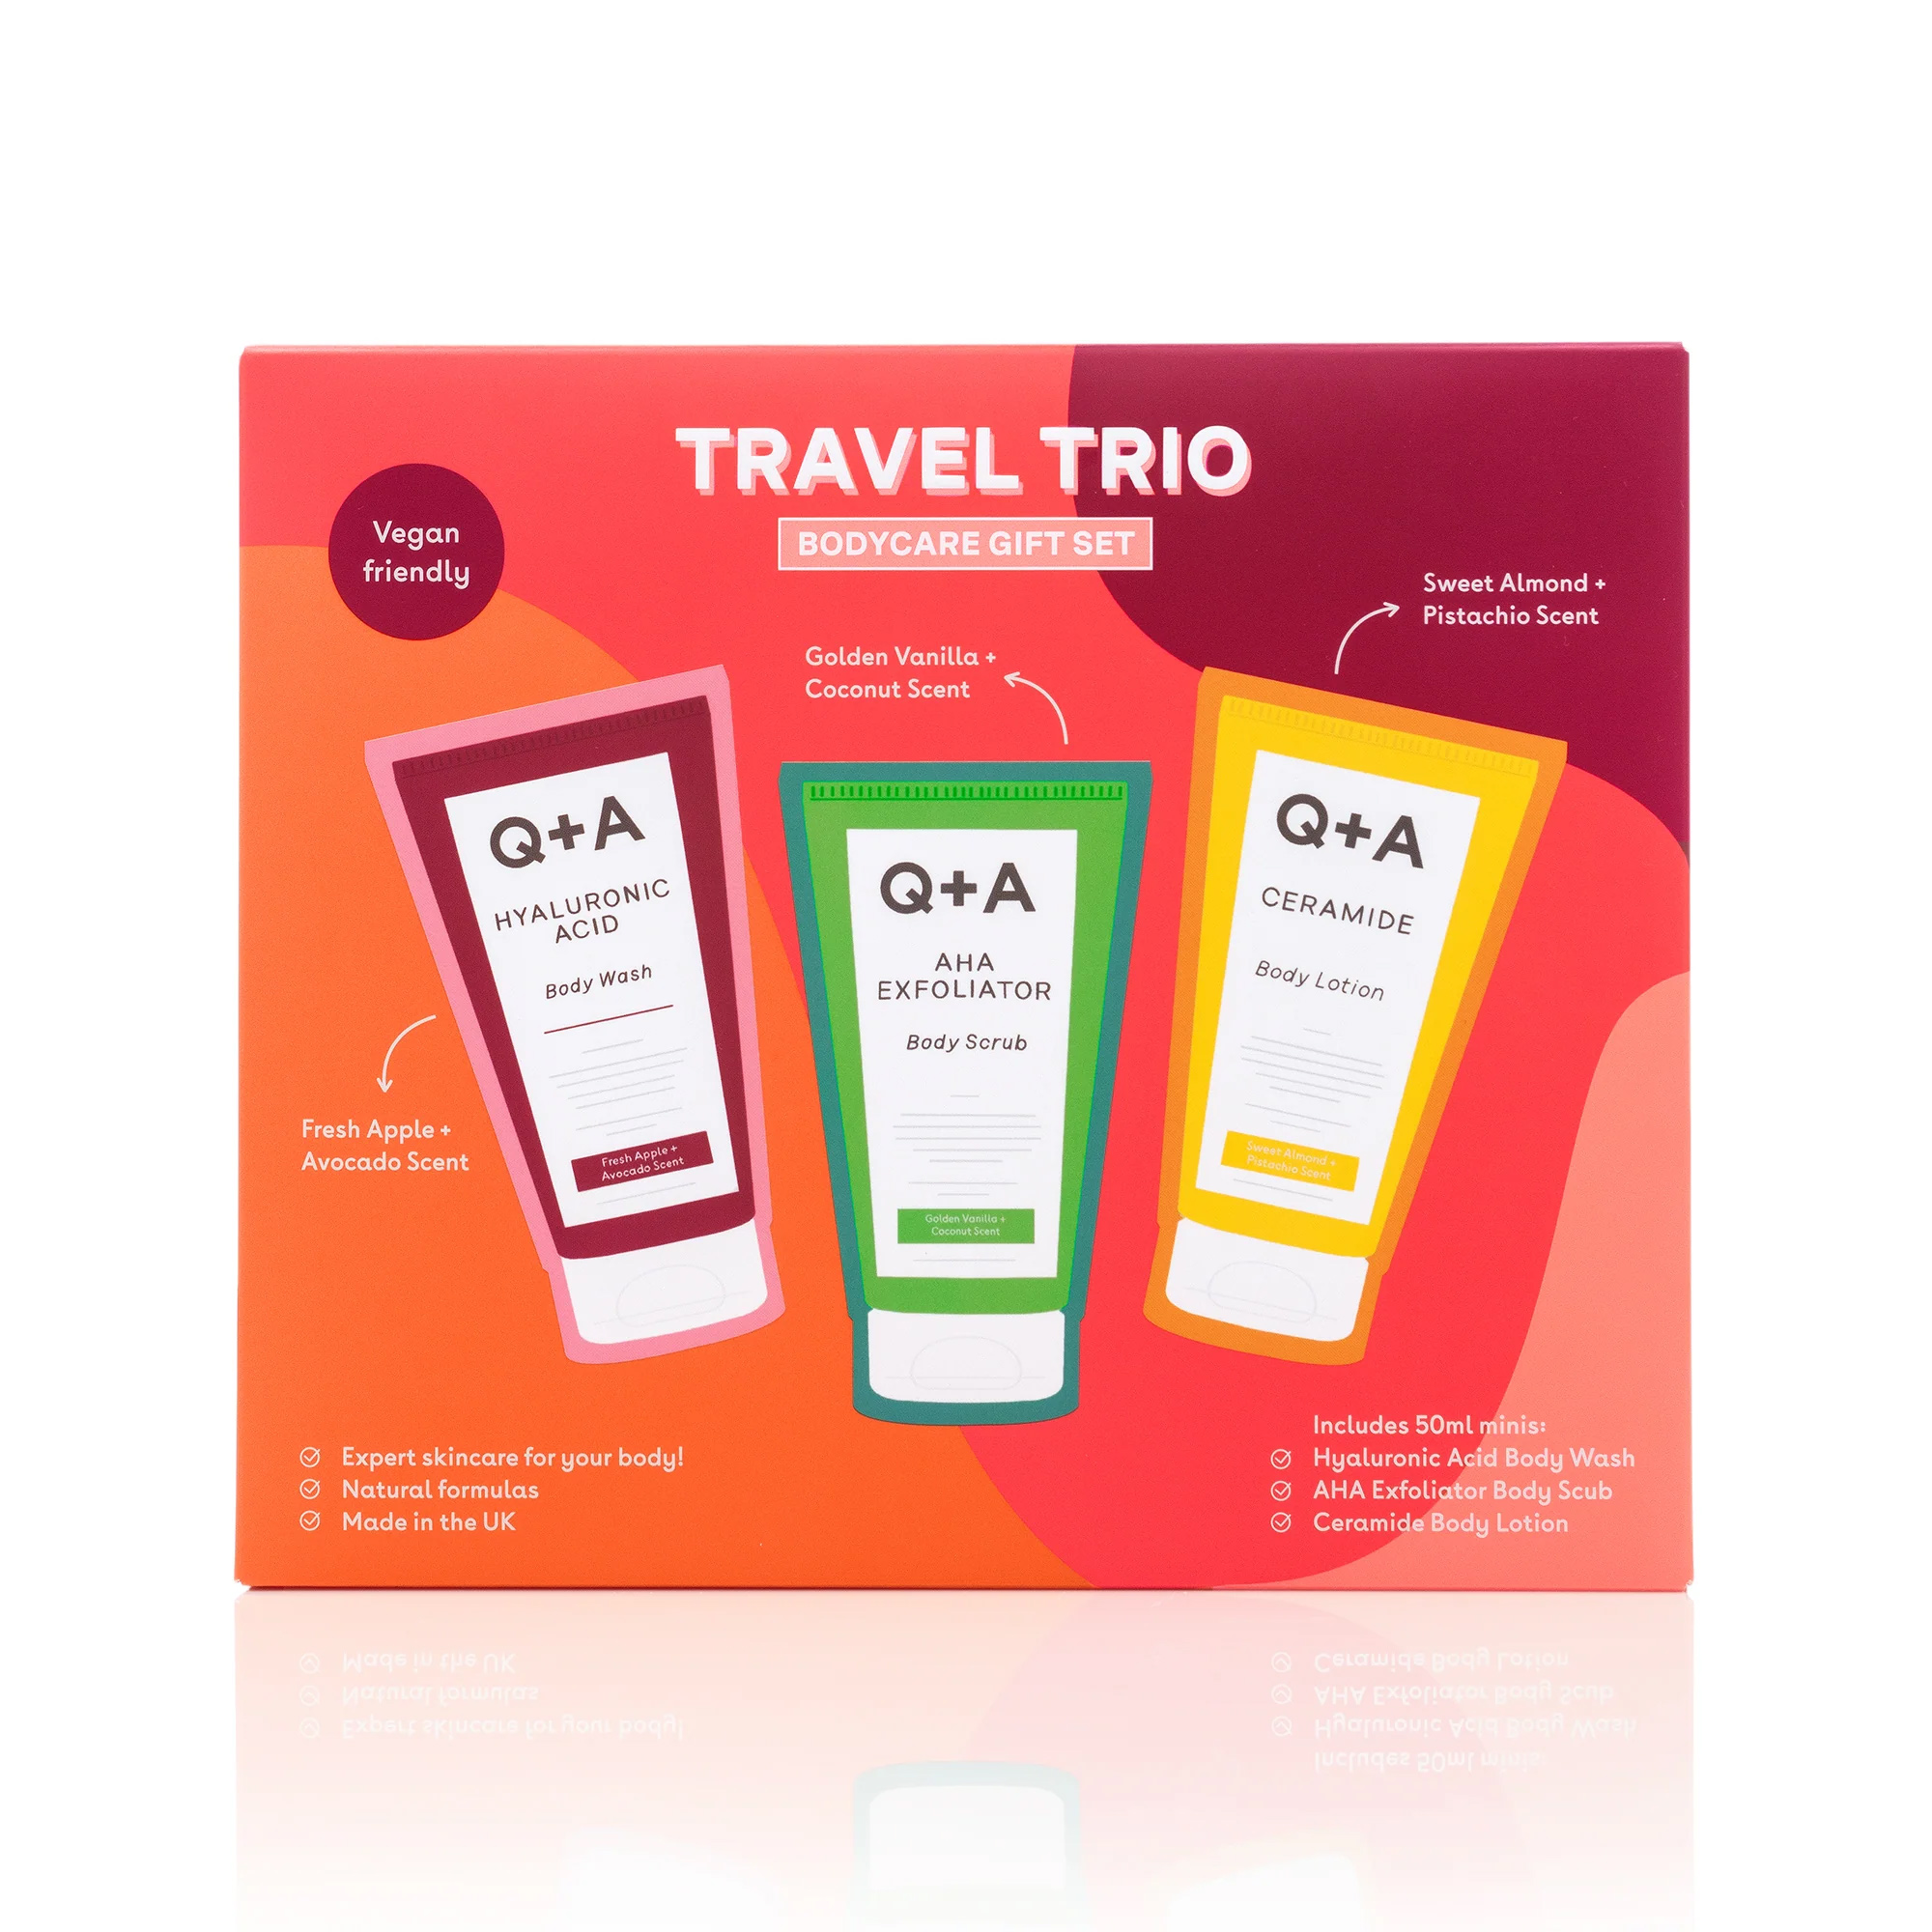 Travel Trio Bodycare Gift Set